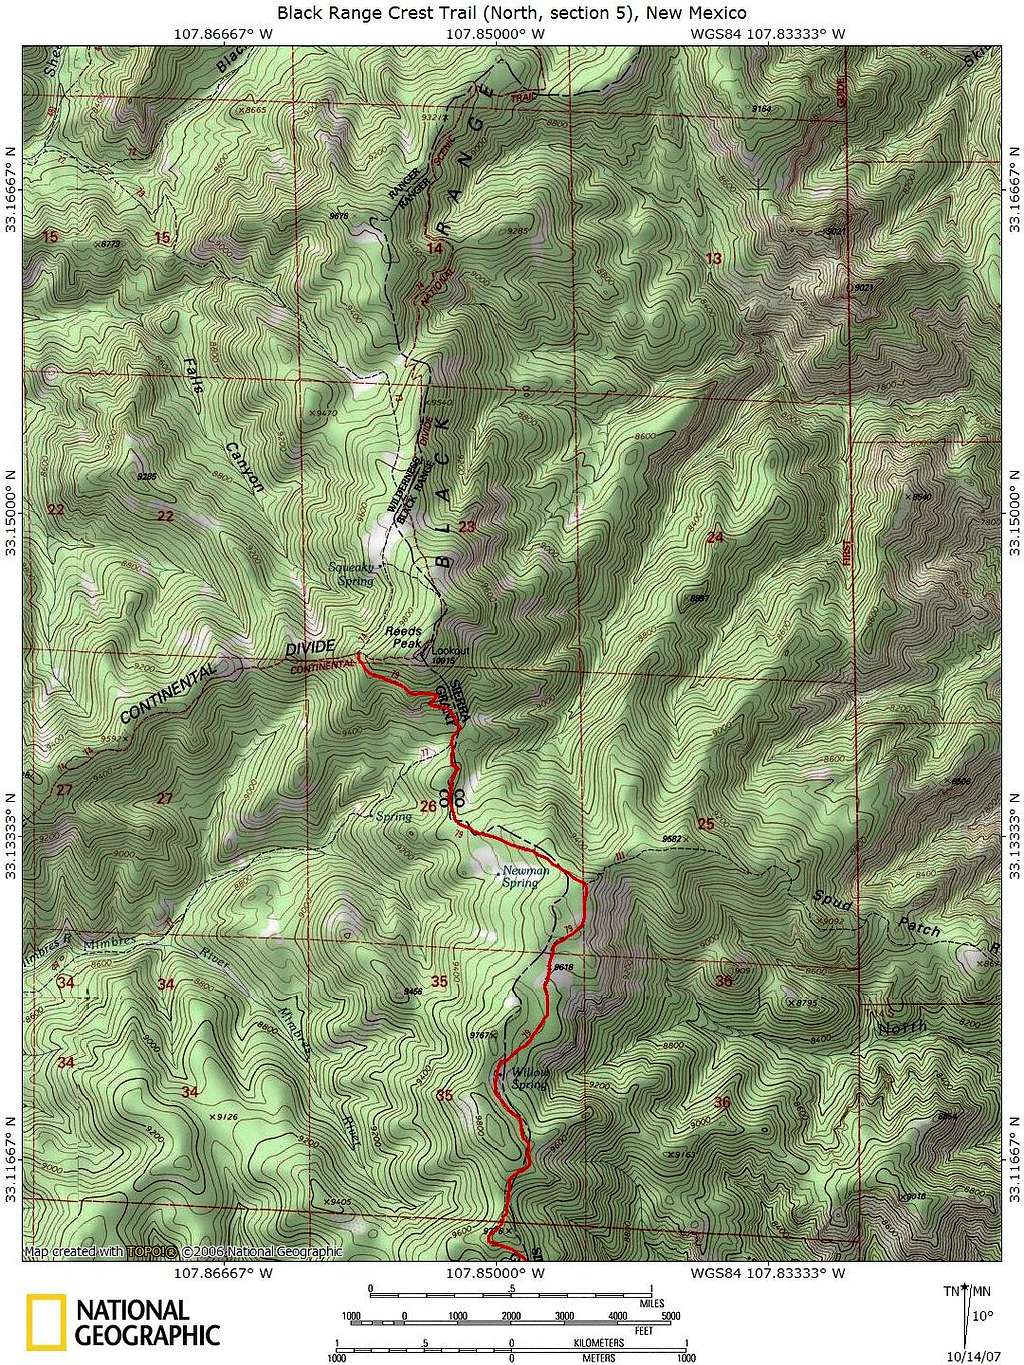 Black Range Crest Trail (North, section 5)